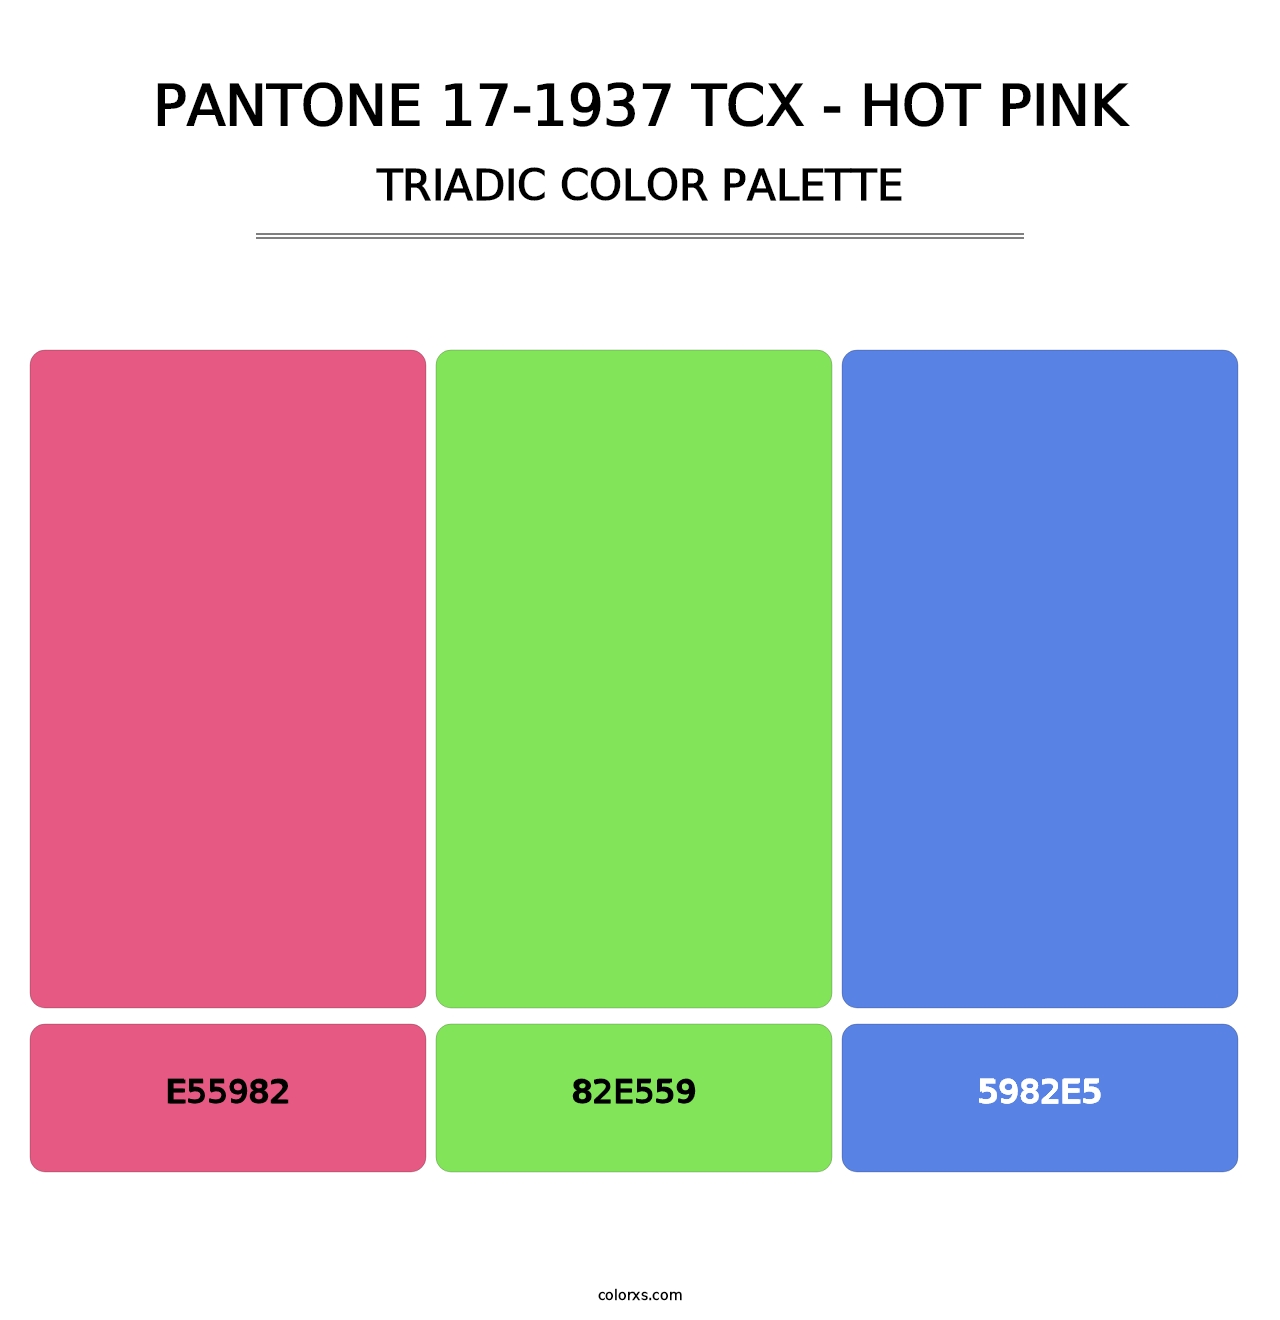 PANTONE 17-1937 TCX - Hot Pink - Triadic Color Palette